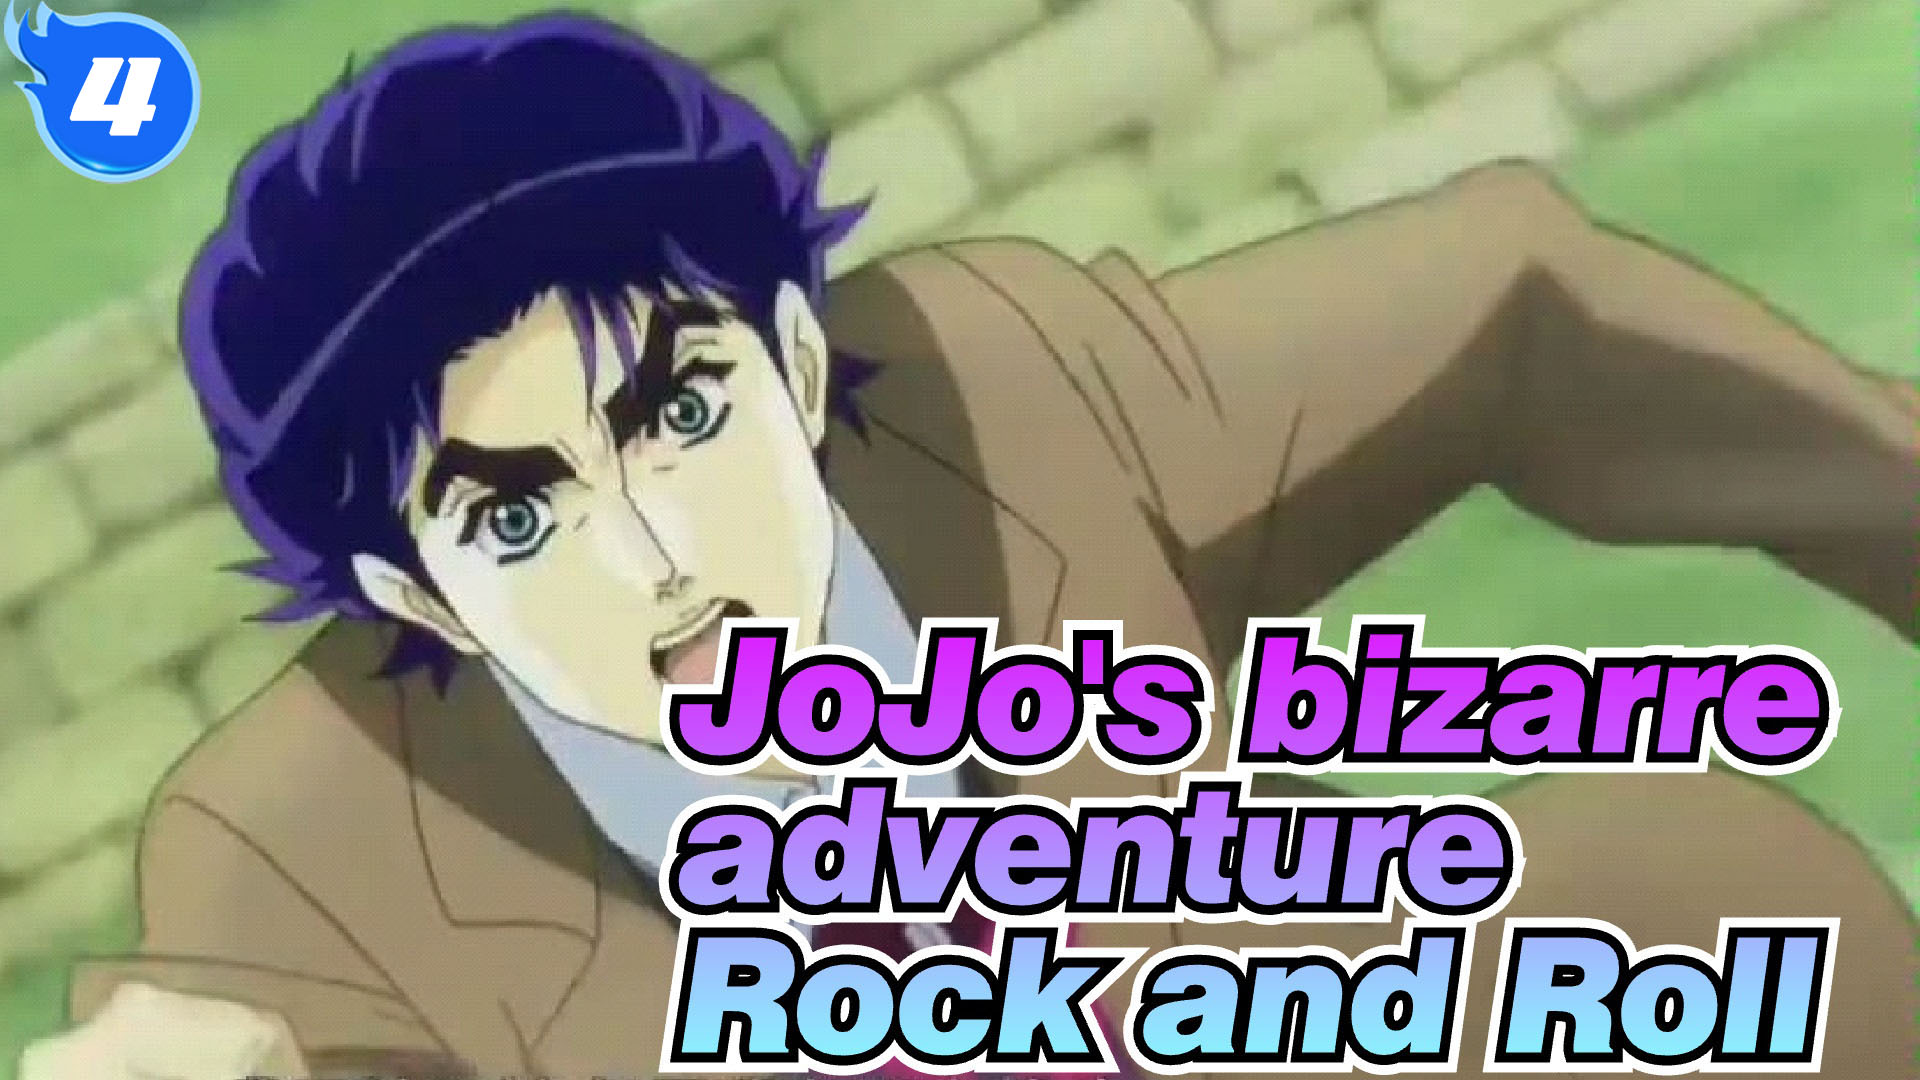 JoJo's bizarre adventure] Rock and Roll Features_4 - BiliBili